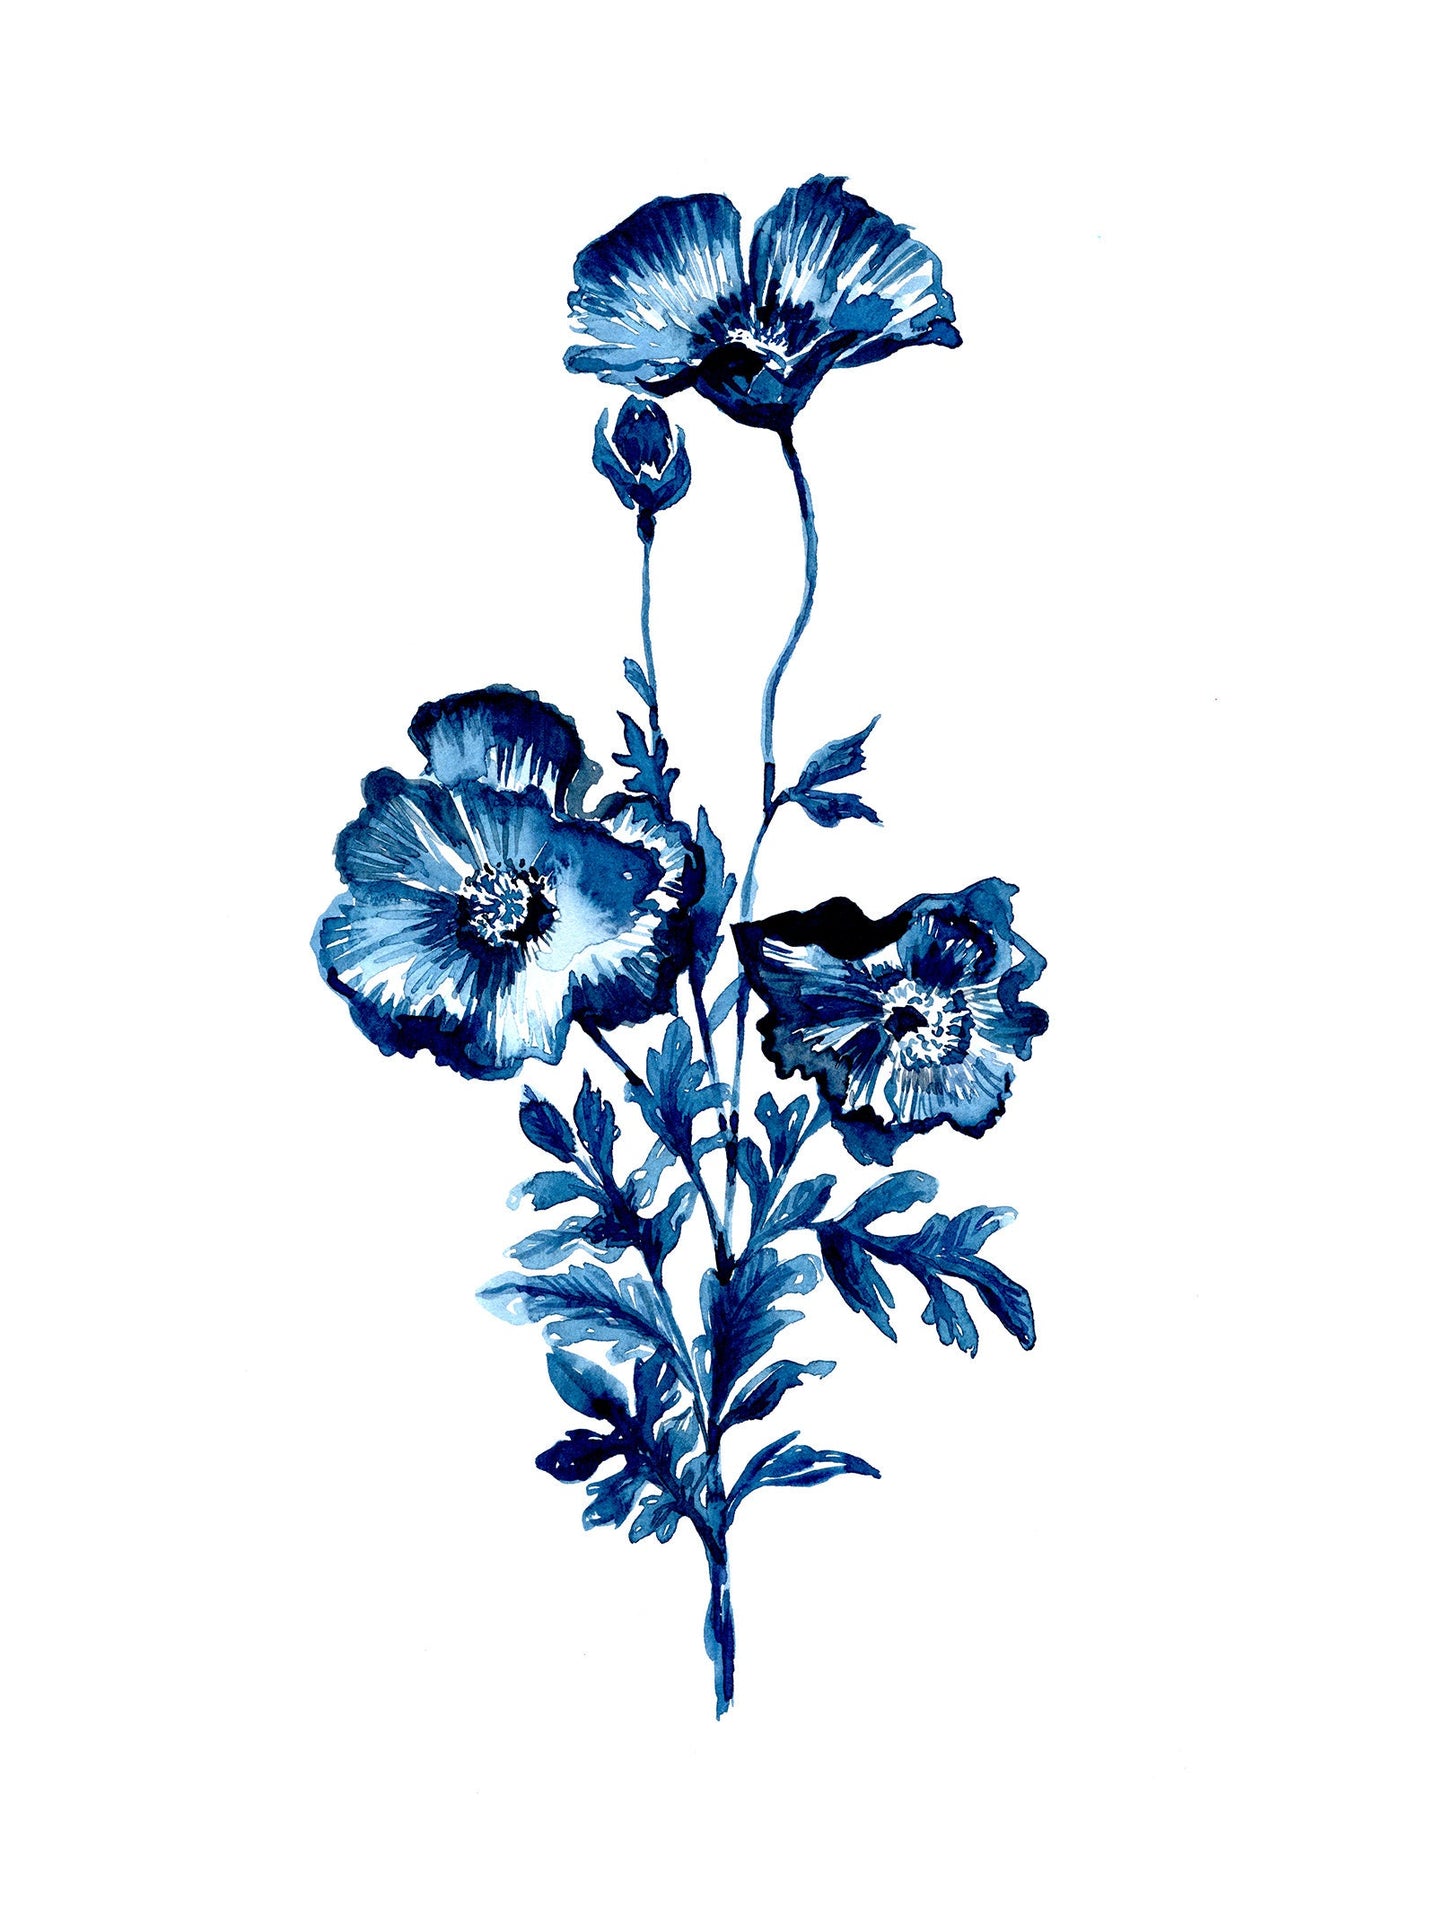 Indigo Poppies - PRINT, monochrome, watercolor, floral, blue, stems, flowers, botanical art